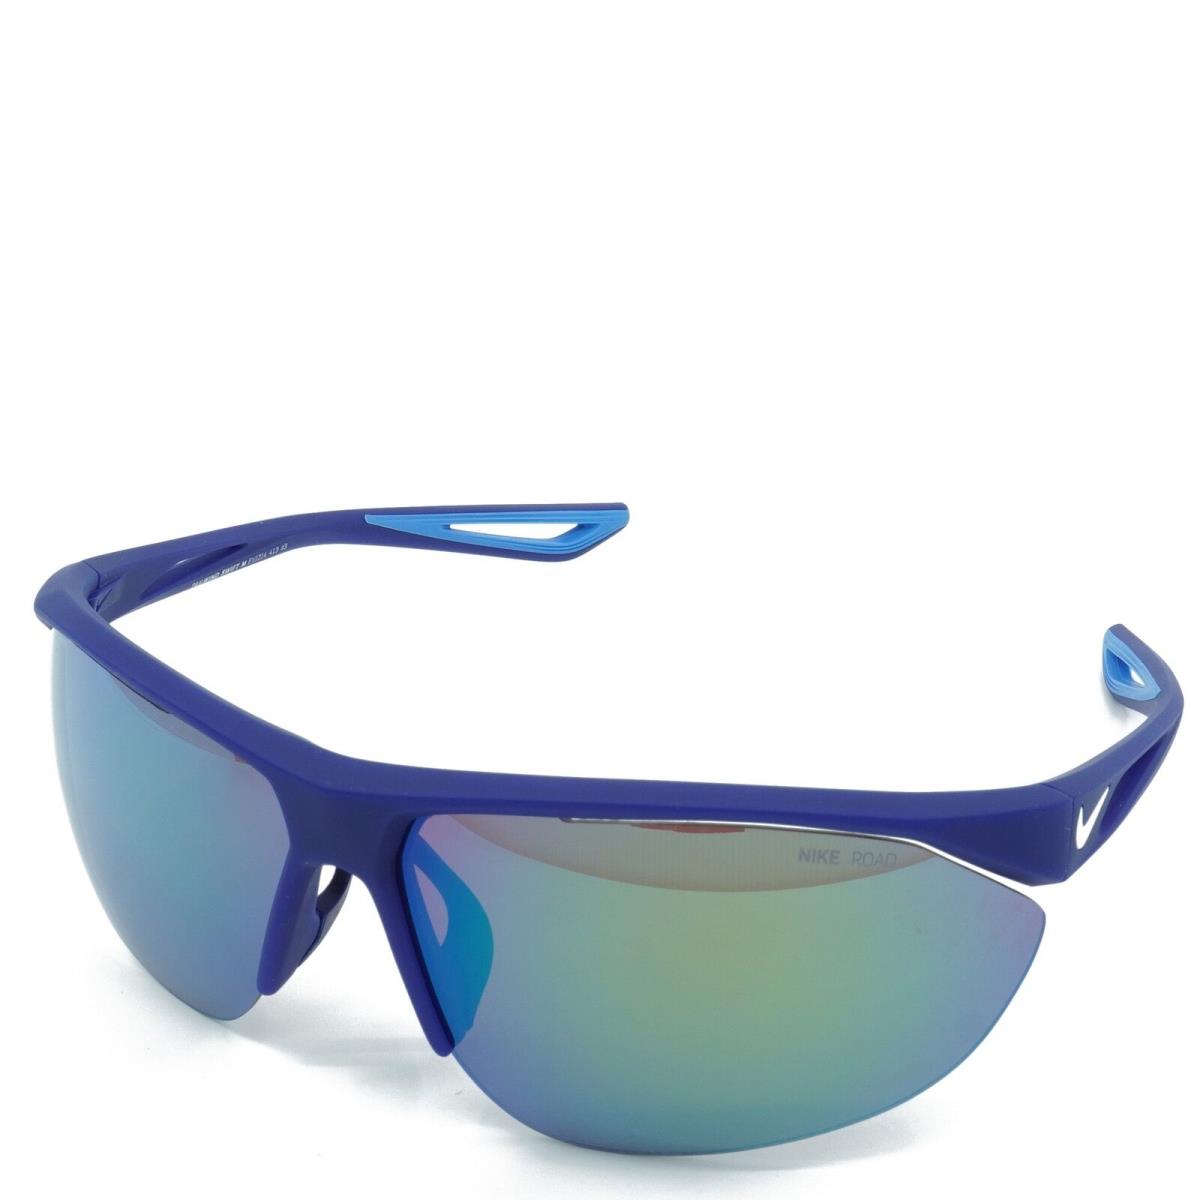 EV1214-413 Mens Nike Tailwind Swift Sunglasses - Frame: Matte Deep Royal Blue